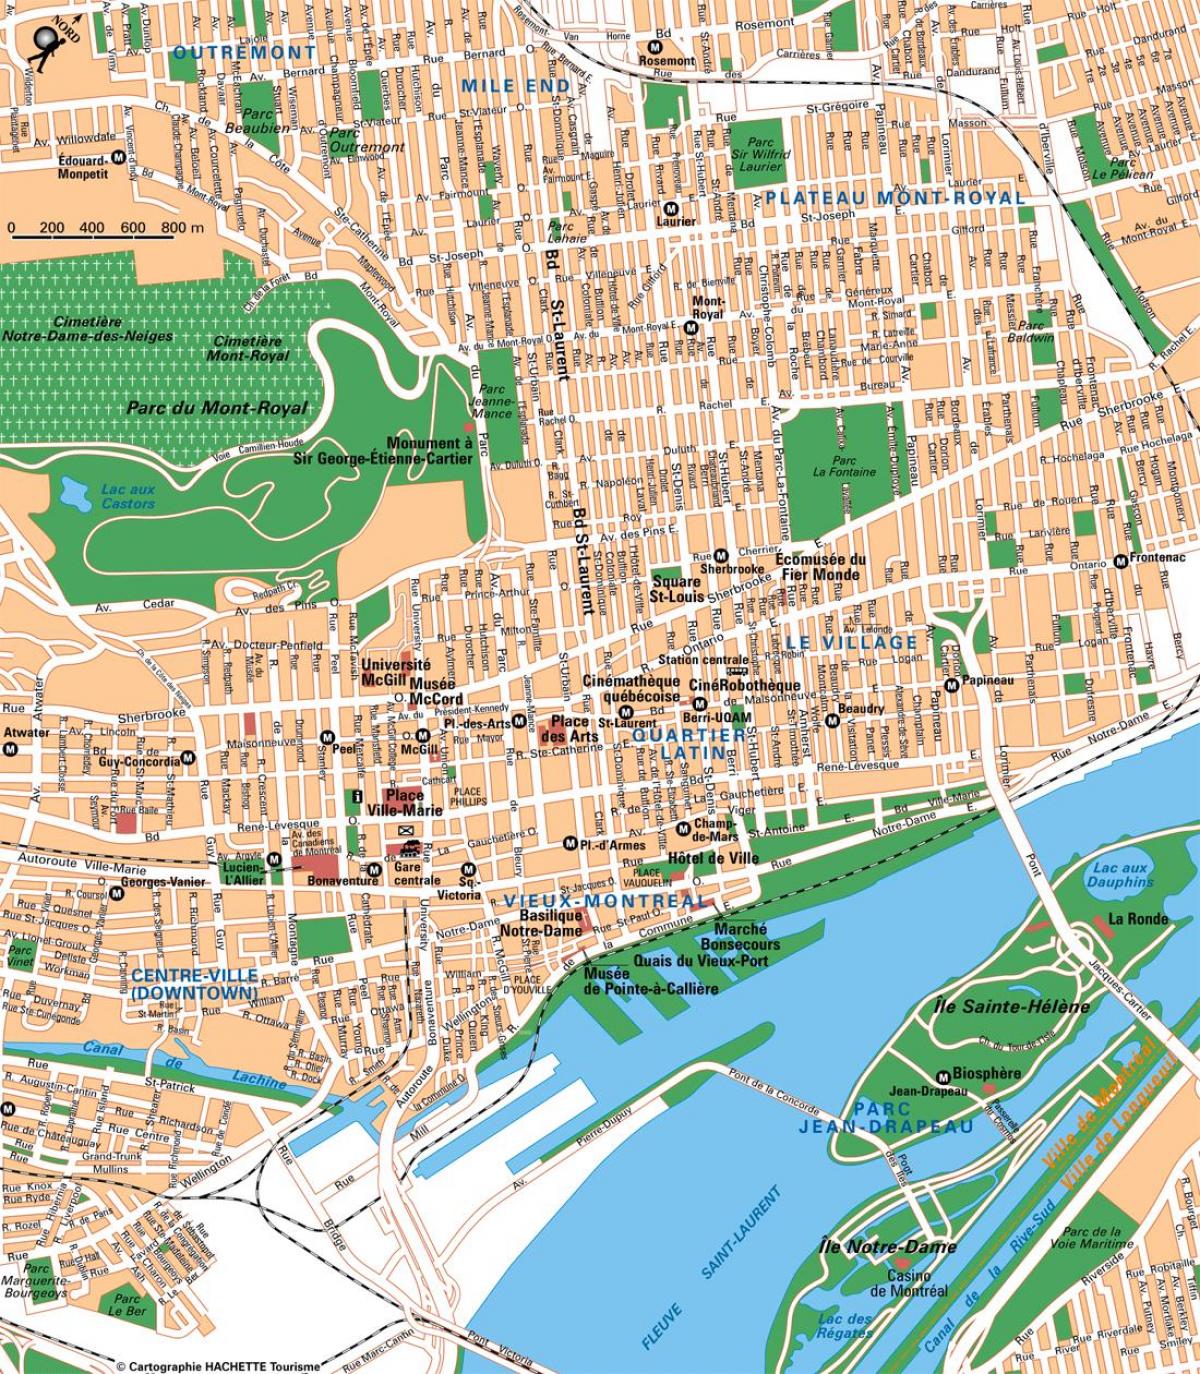 Plan des rues de Montreal